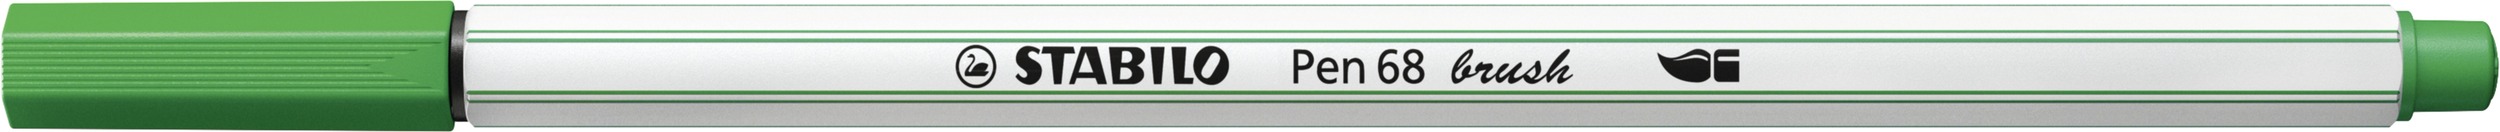 STABILO Pinselstift Pen 68 brush, smaragdgrün